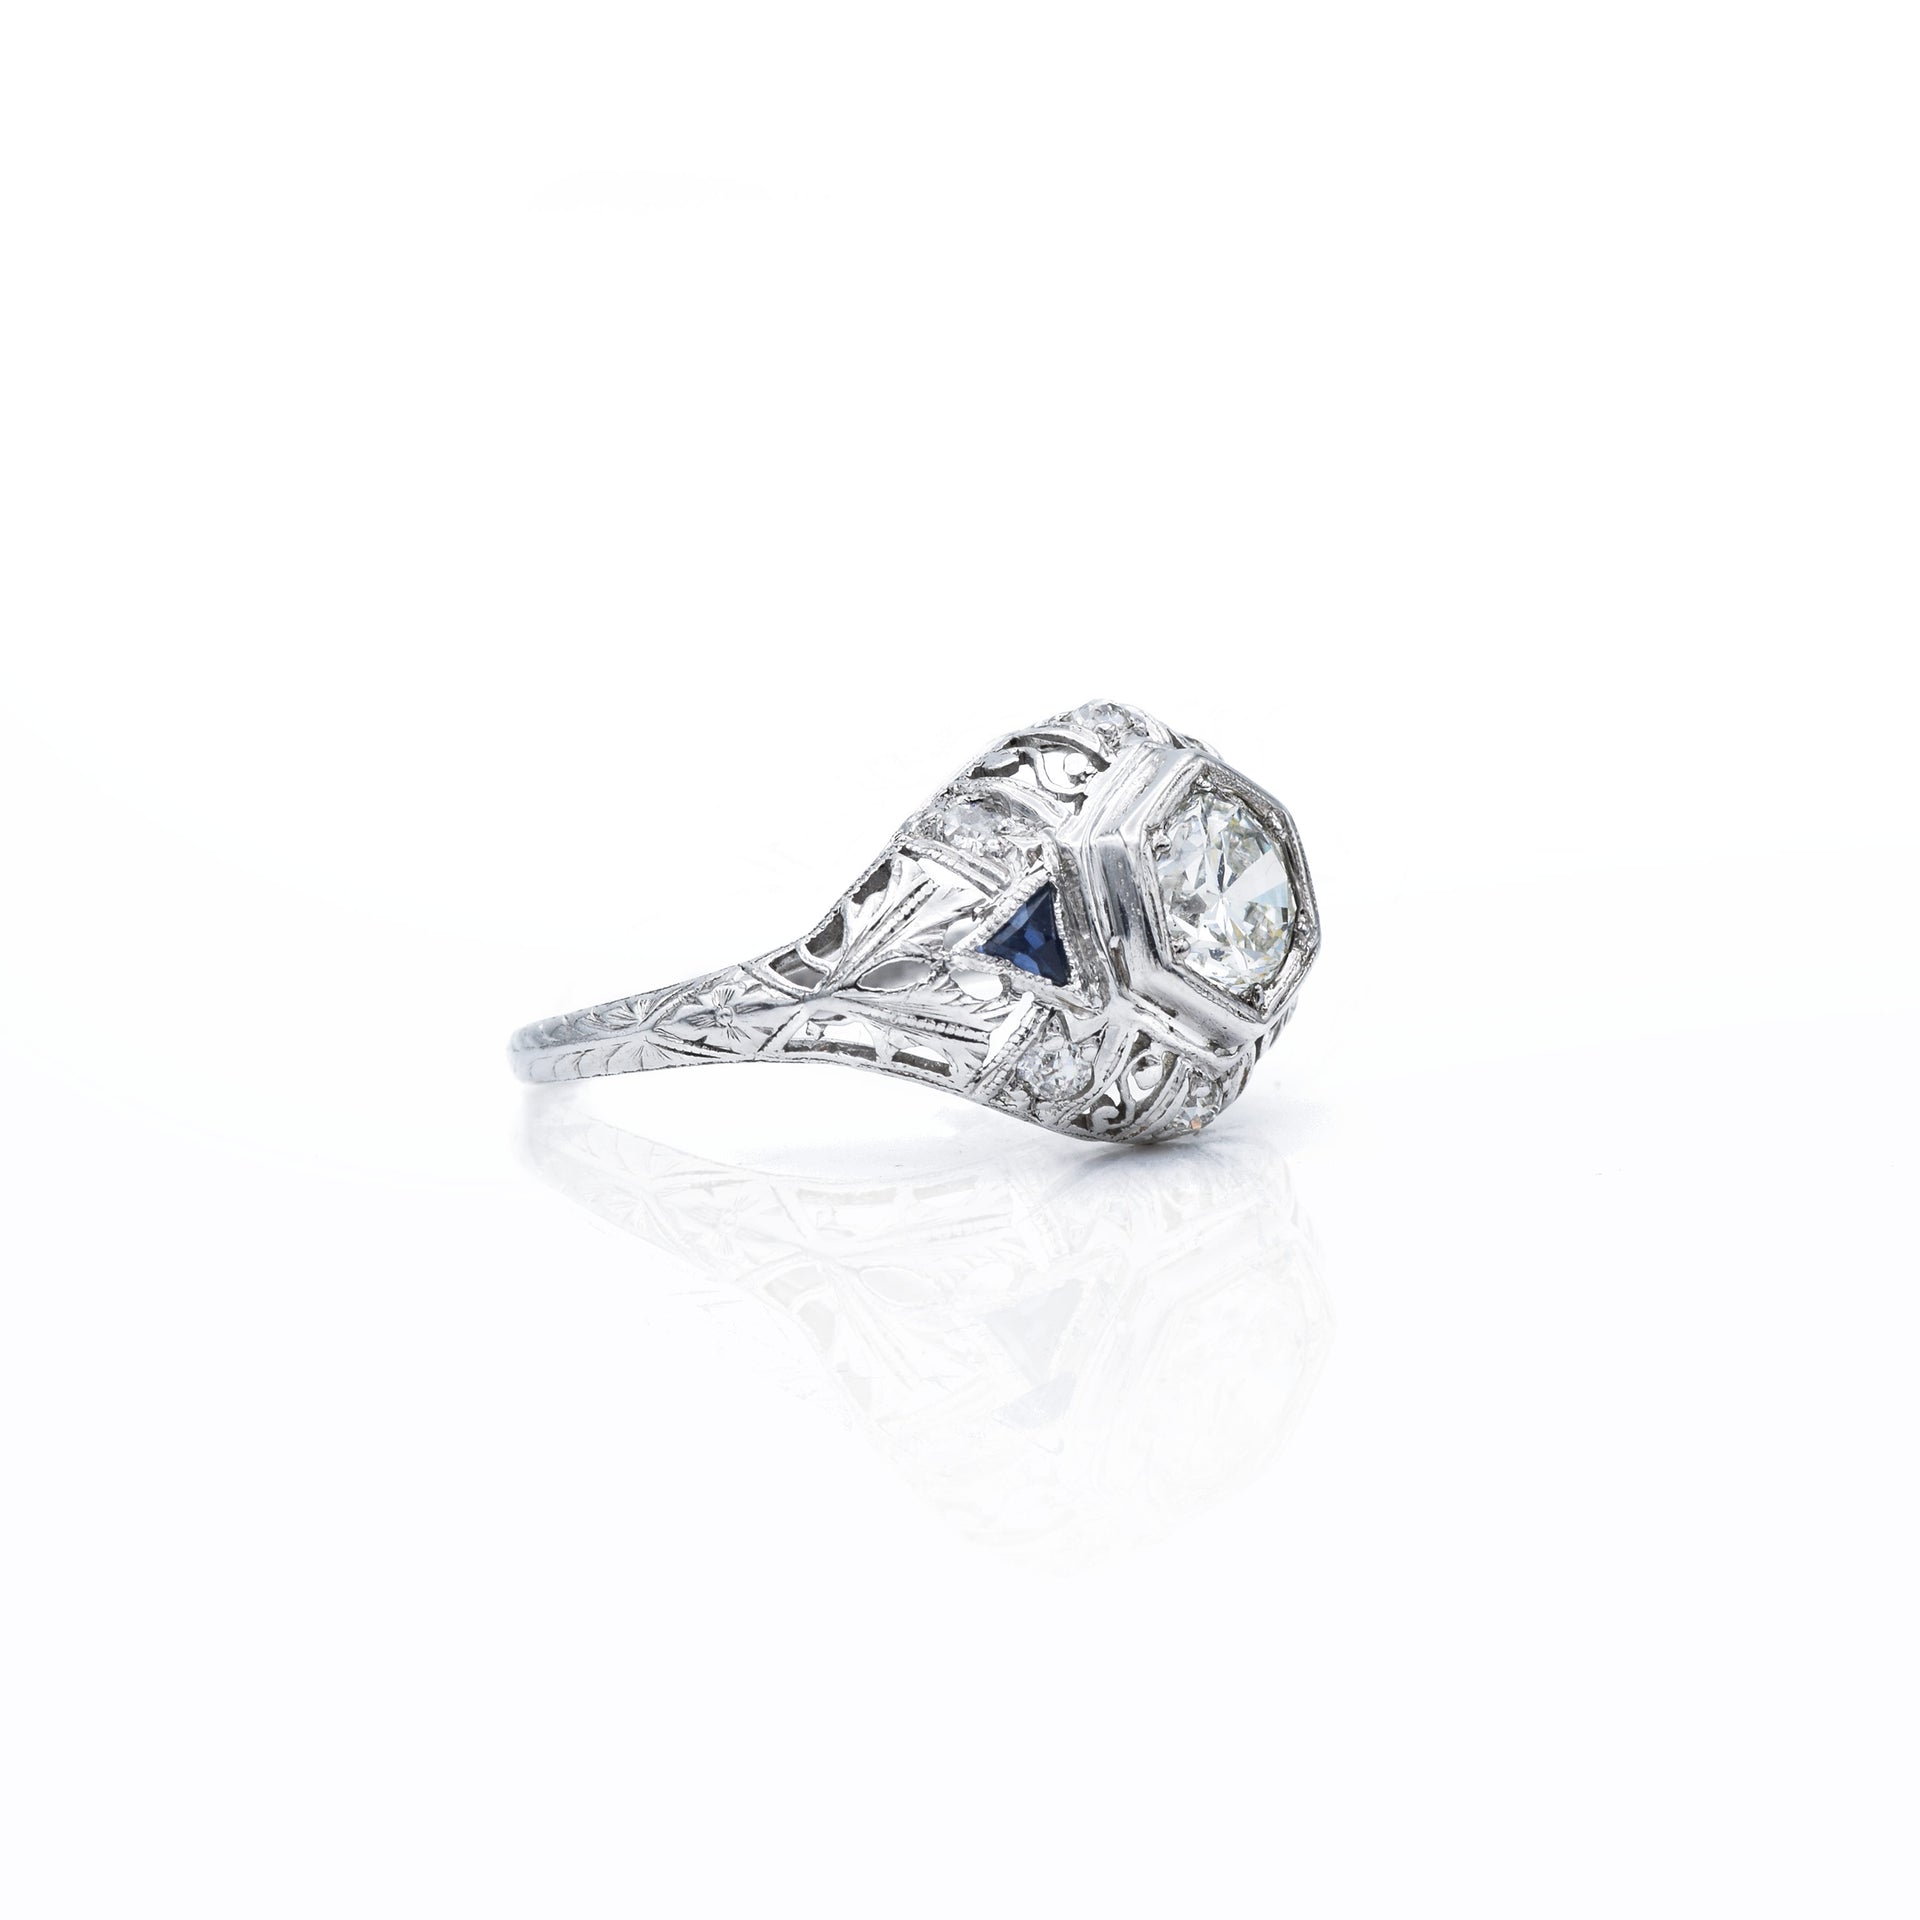 Vintage c. 1930s Art Deco Platinum & Diamond Ring